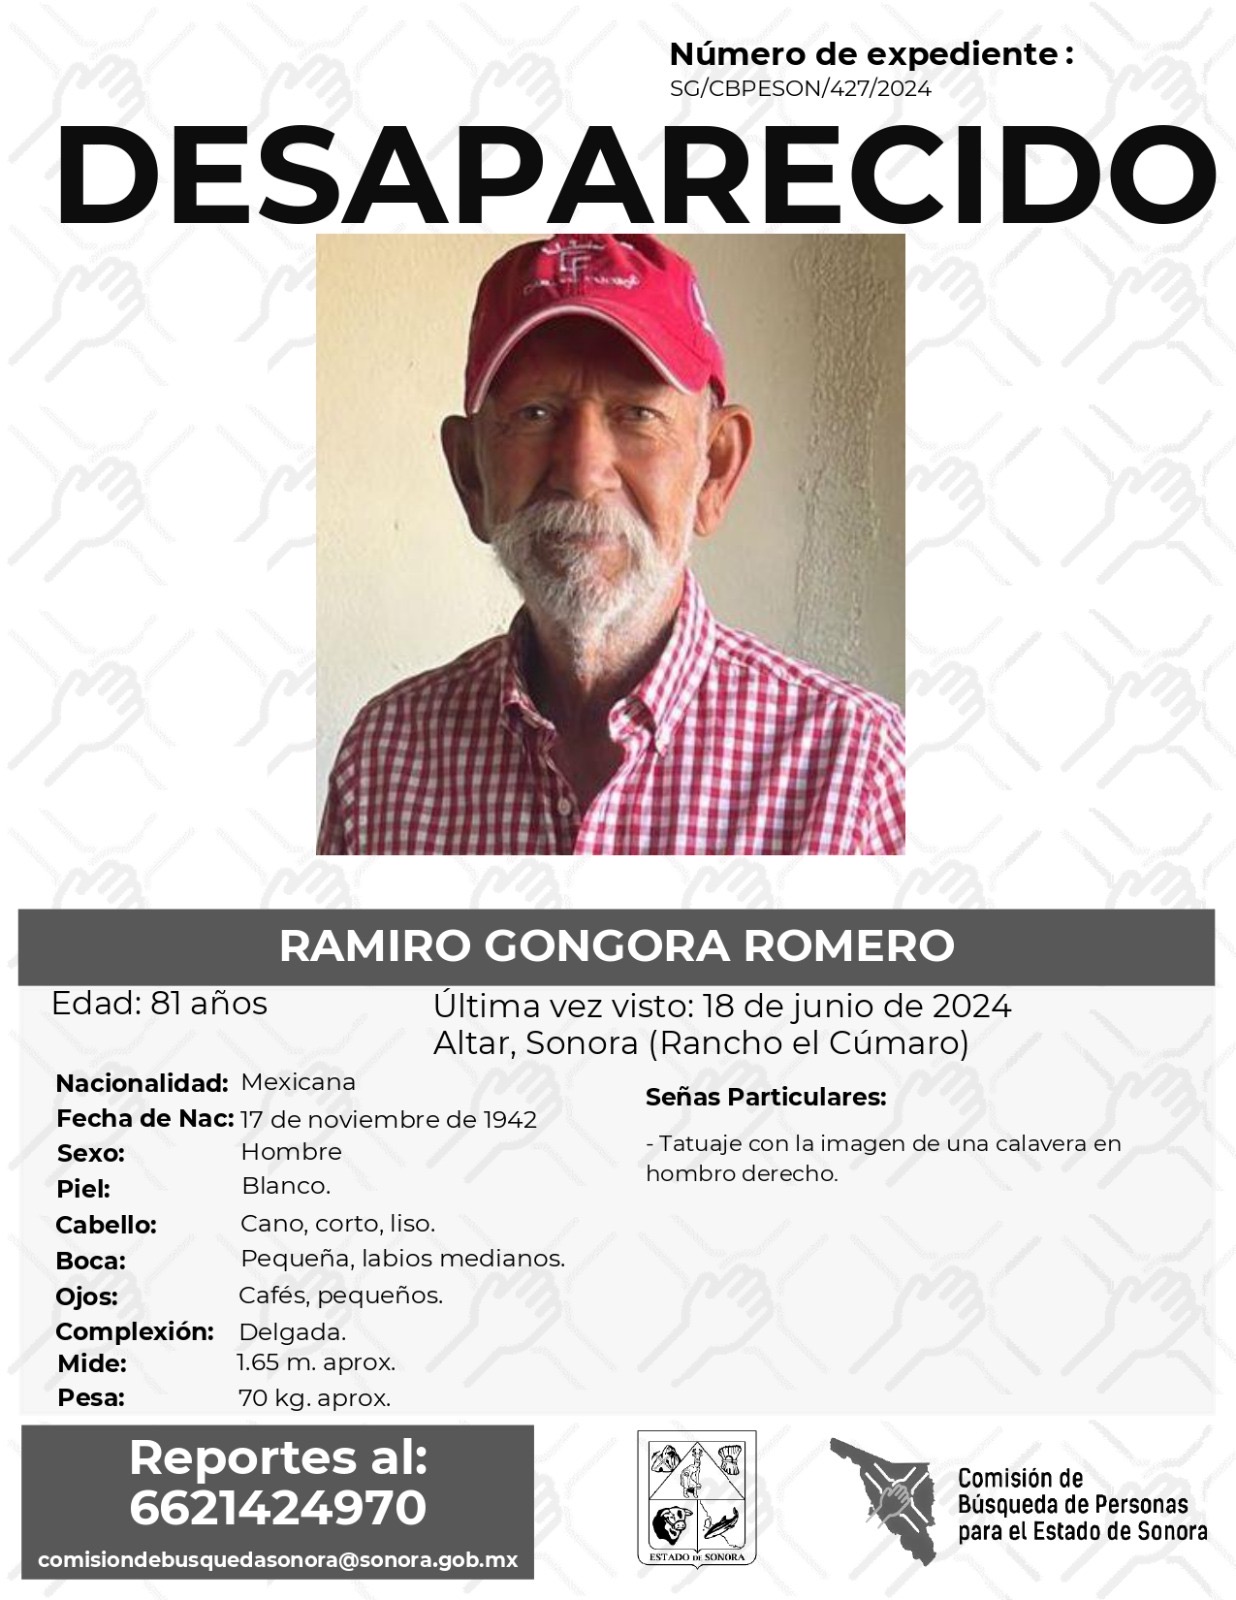 RAMIRO GONGORA ROMERO - DESAPARECIDO